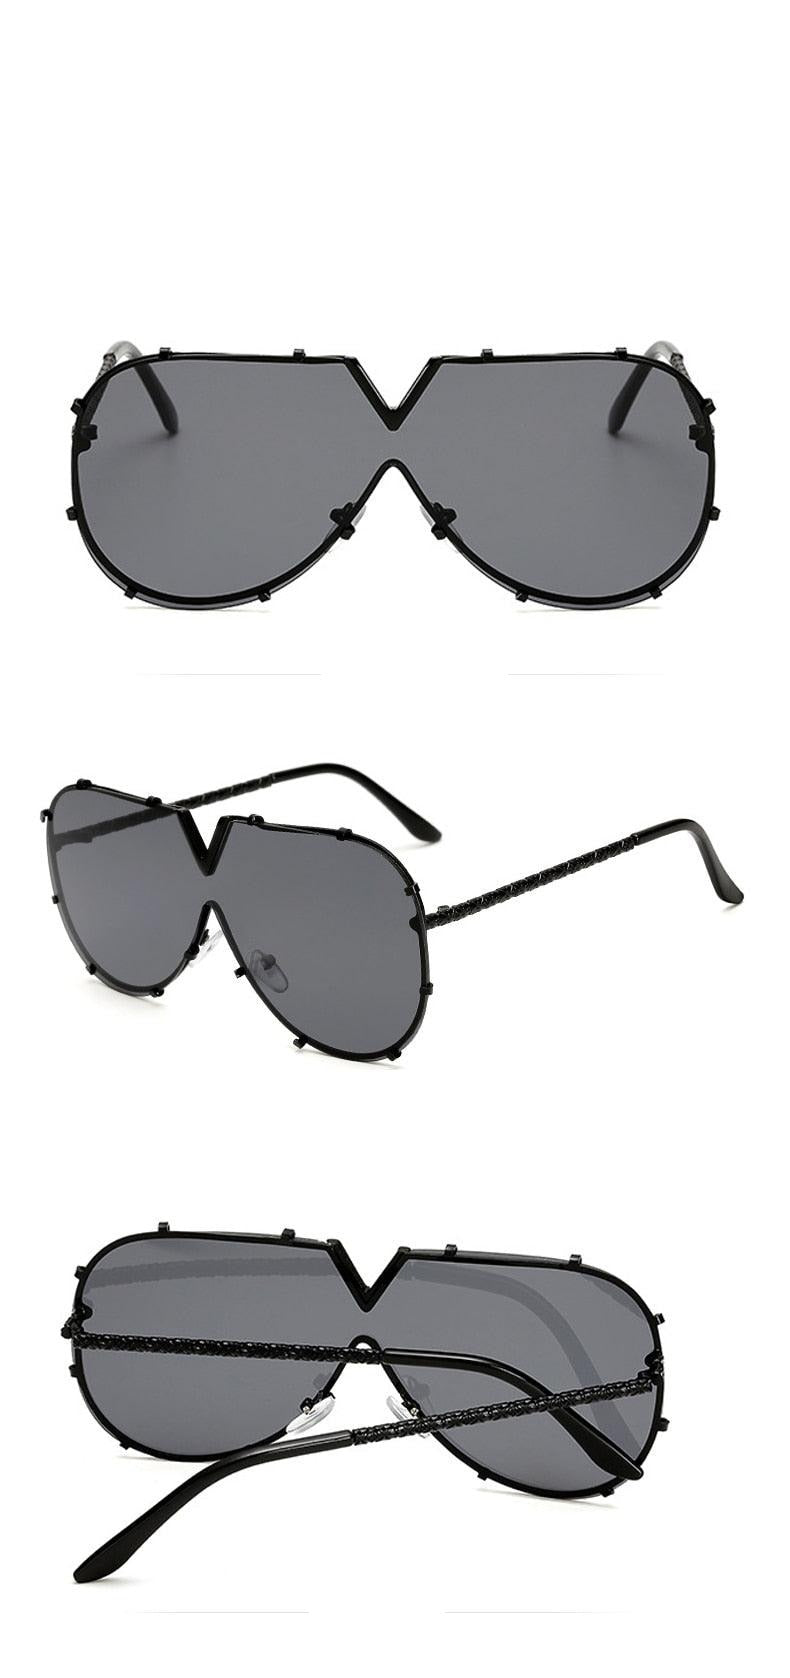 Jessie Sunglasses - Tha Shade Sunglasses